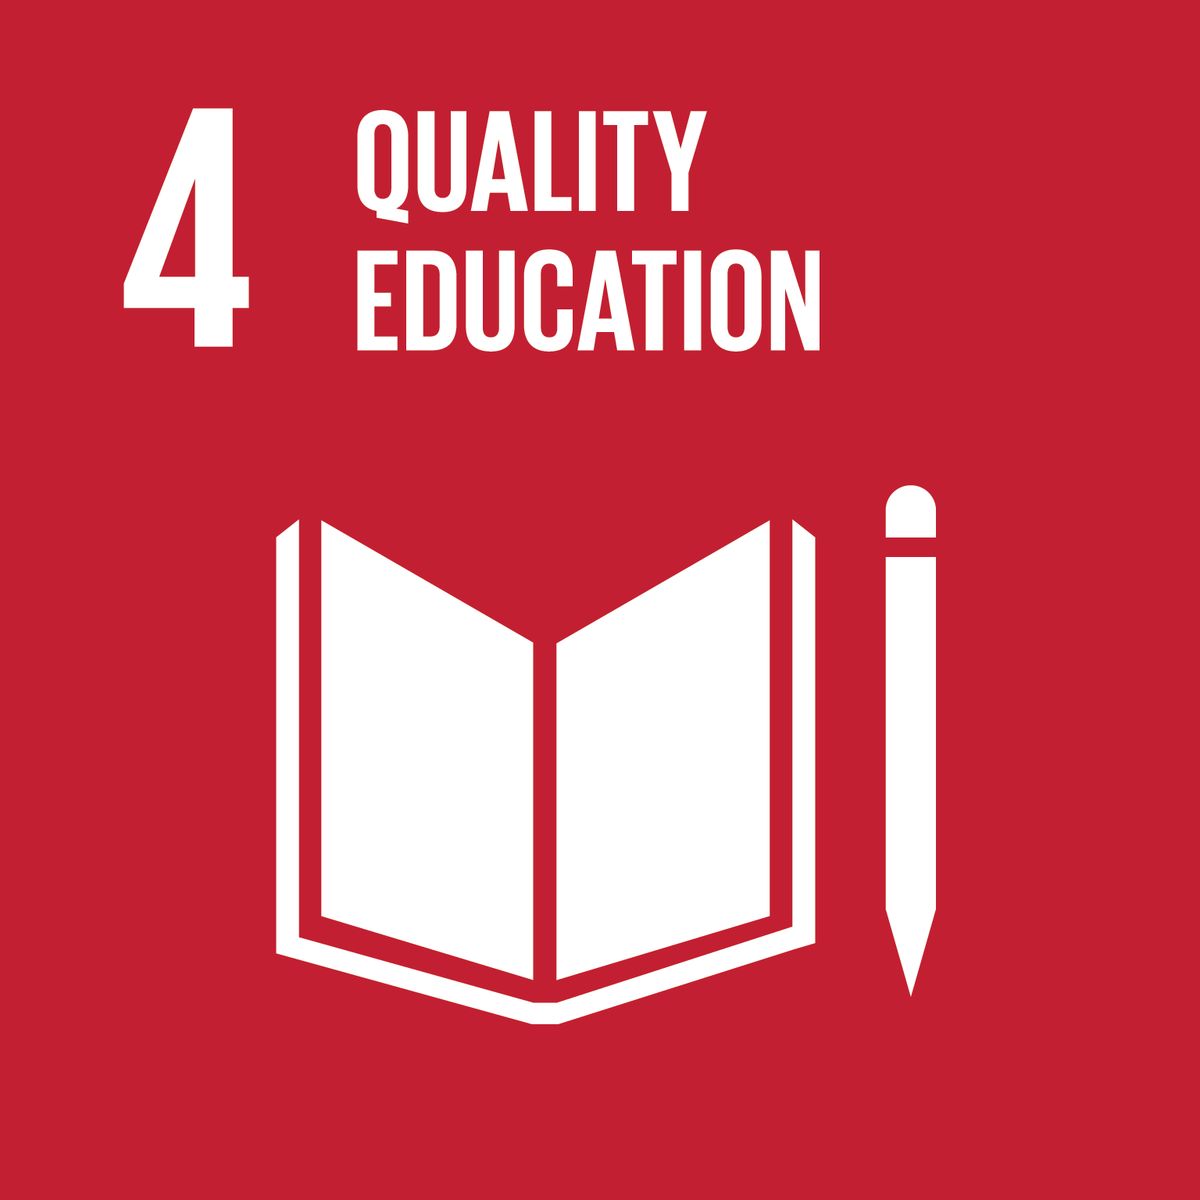 SDG 4 quality education